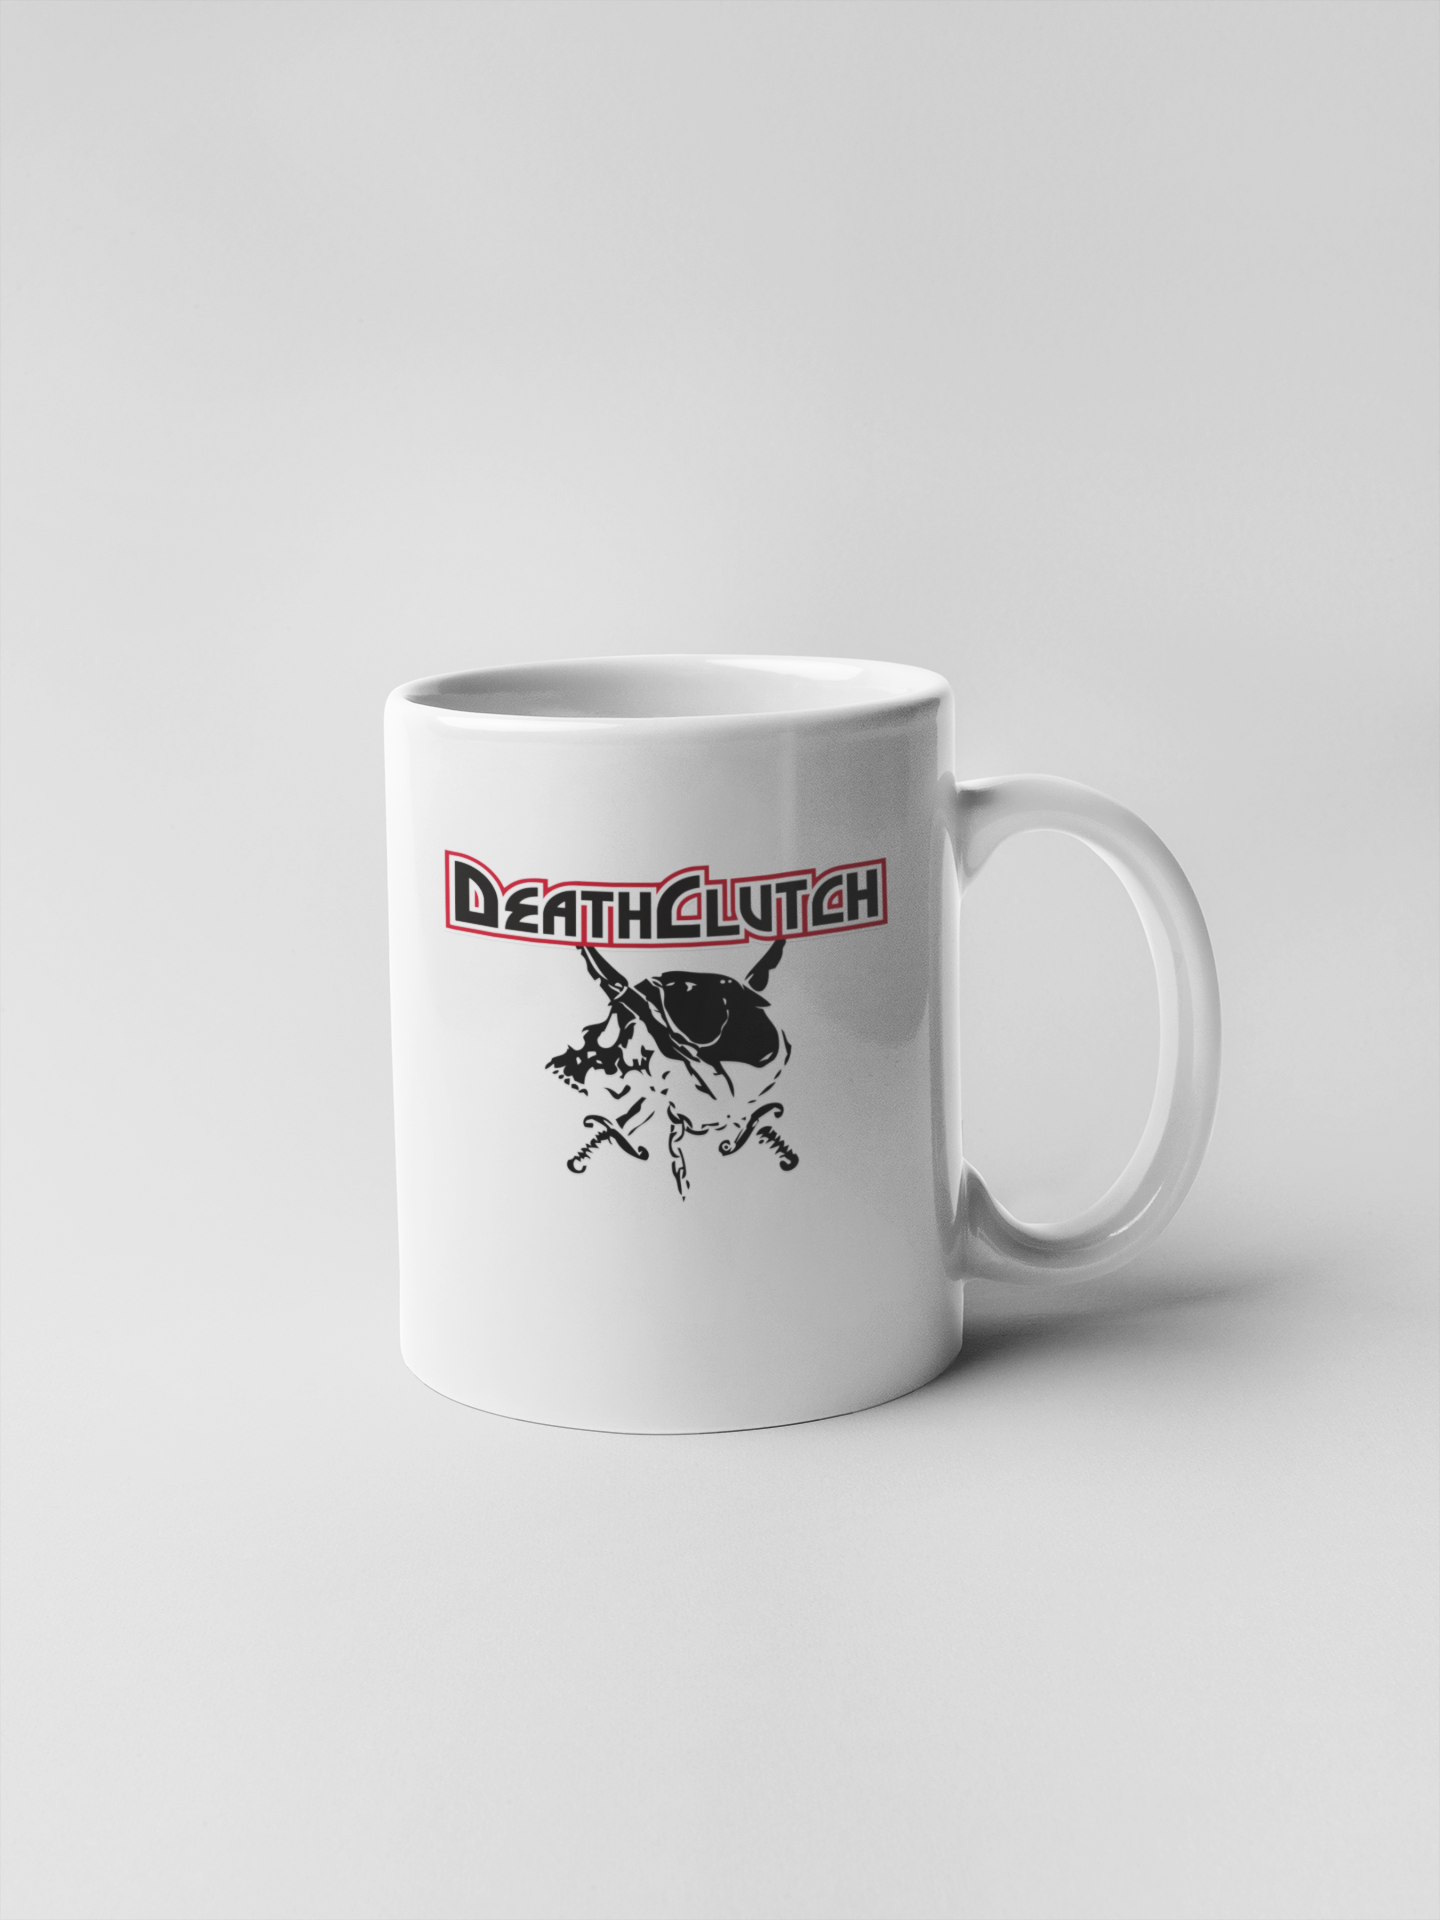 Death Clutch Logo Ceramic Coffee Mugs